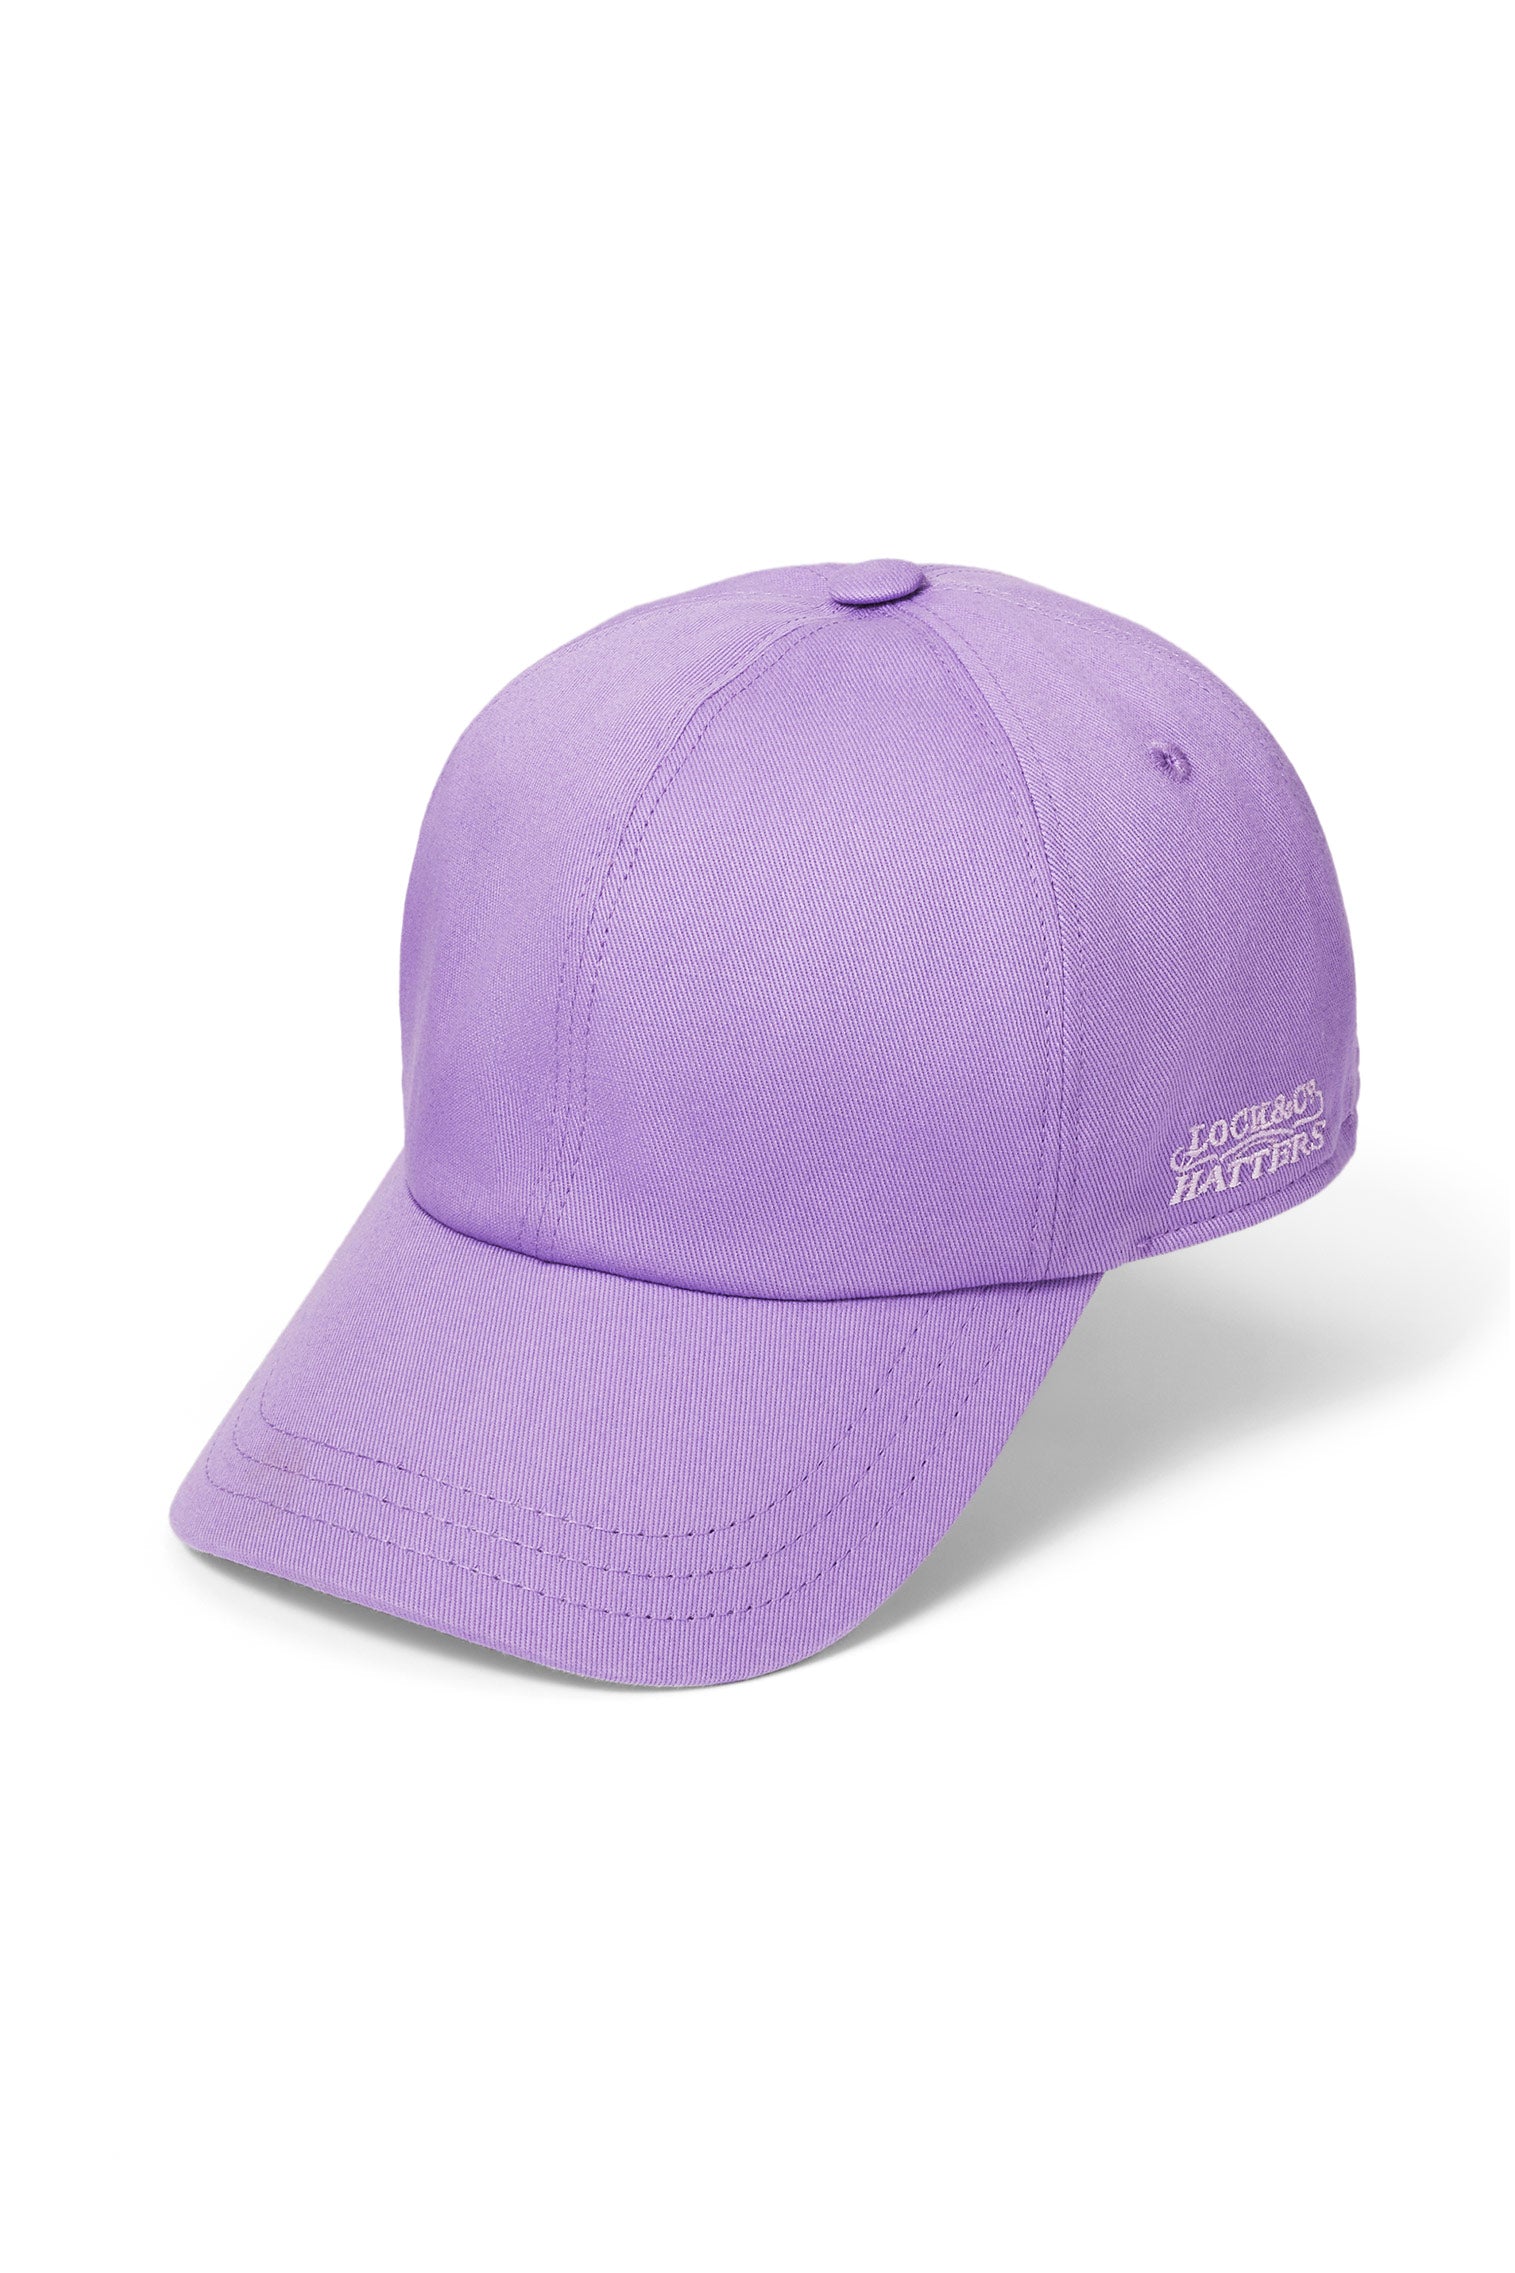 Adjustable Purple Baseball Cap - New Season Hat Collection - Lock & Co. Hatters London UK